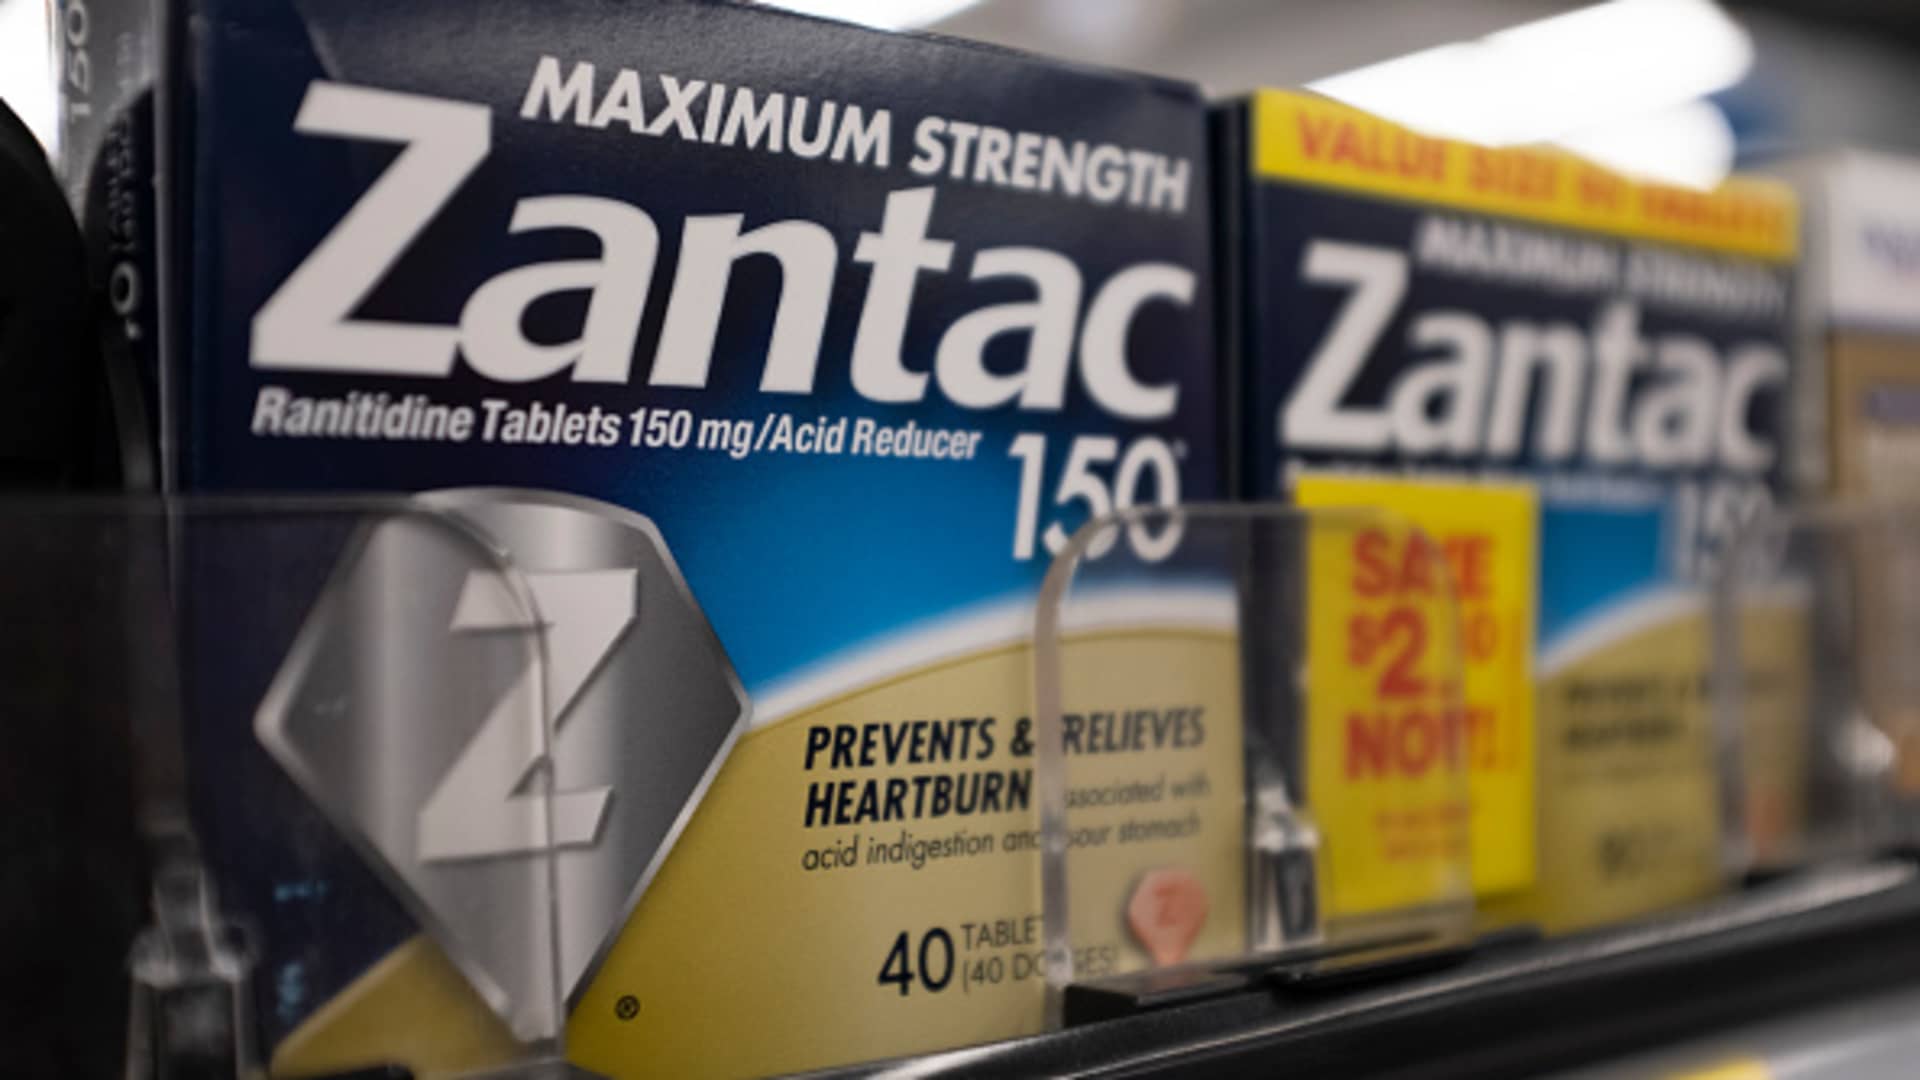 Pharma stocks crater as investors brace for billions in heartburn drug litigation charges